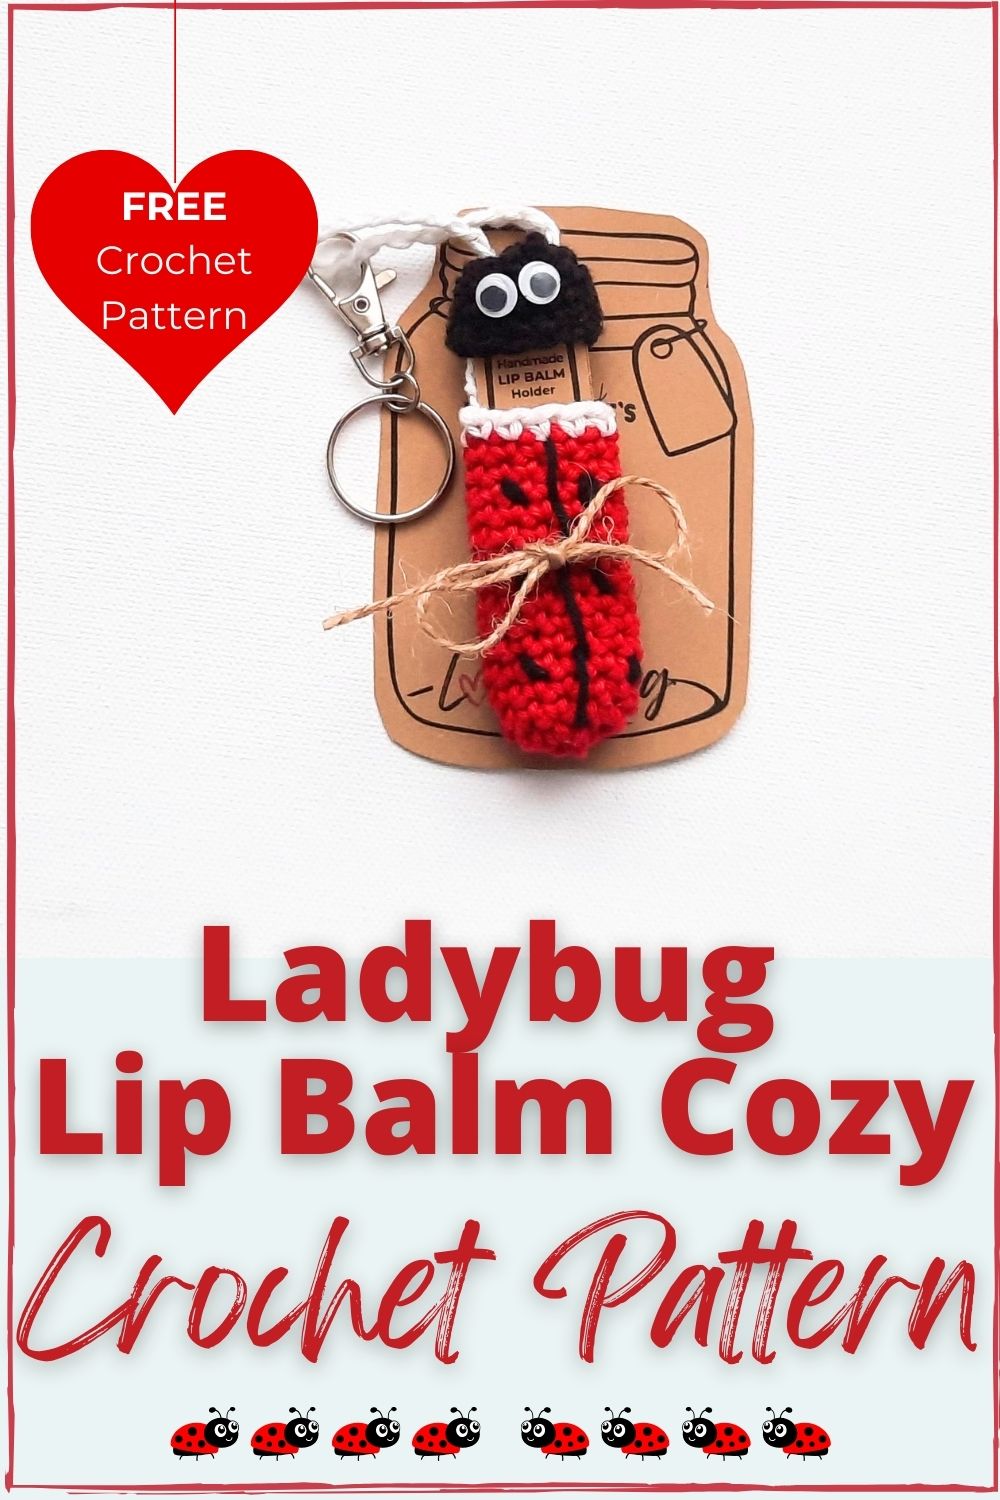 Easy ladybug crochet pattern free